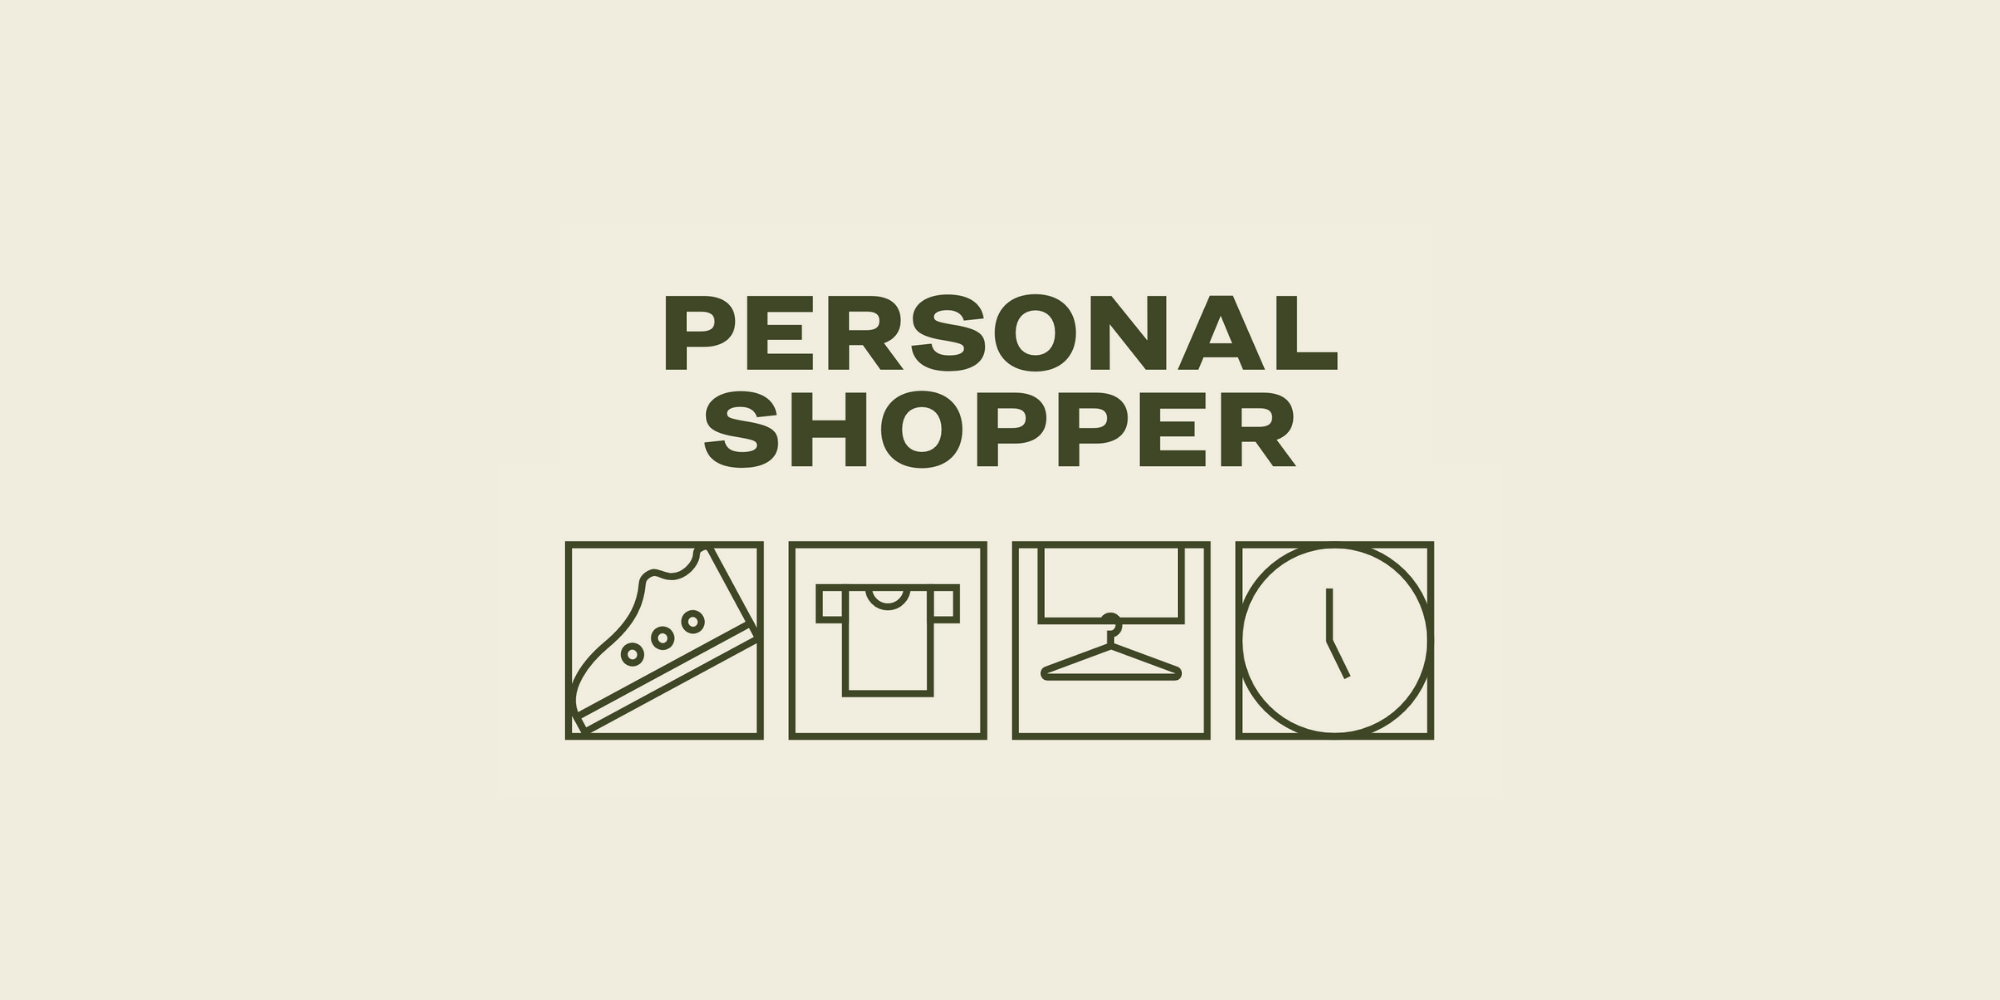 personal shopper logo ideas